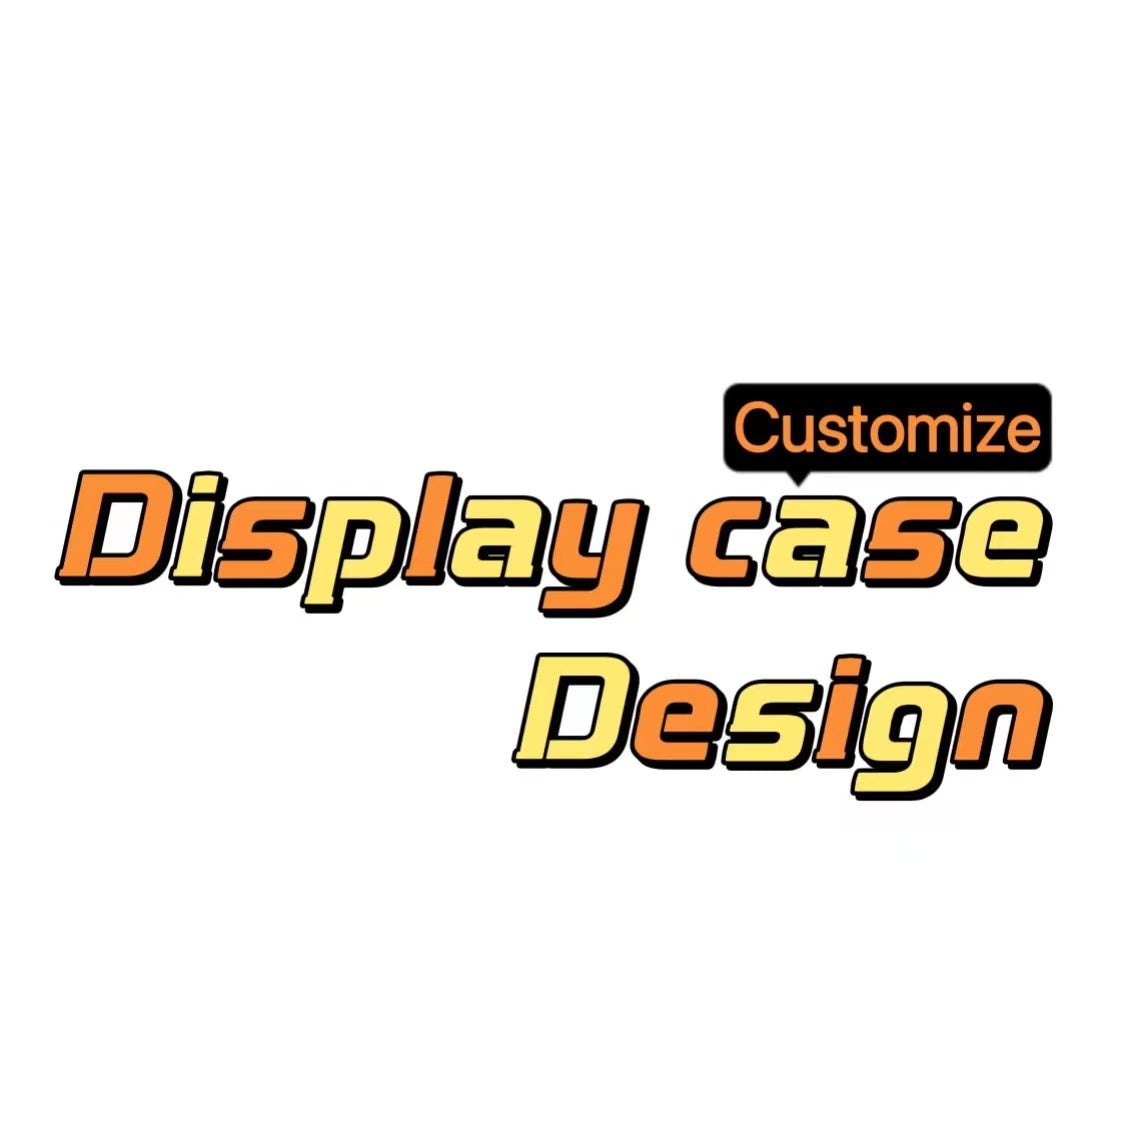 Customize display case Design